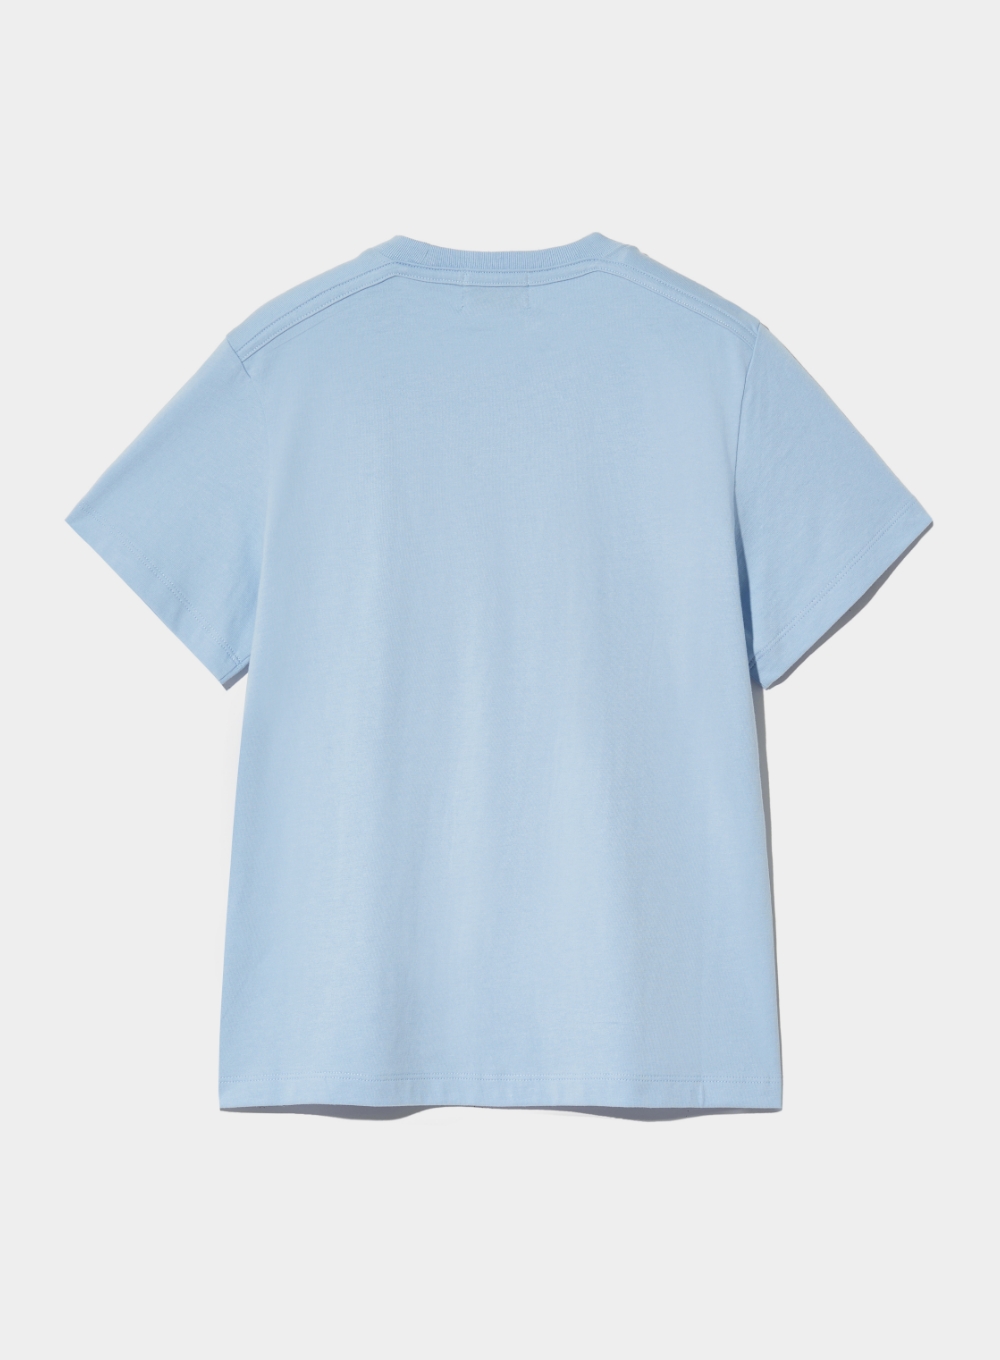 (W) Classy Nostalgia Vintage Graphic T-Shirt - Sky Blue